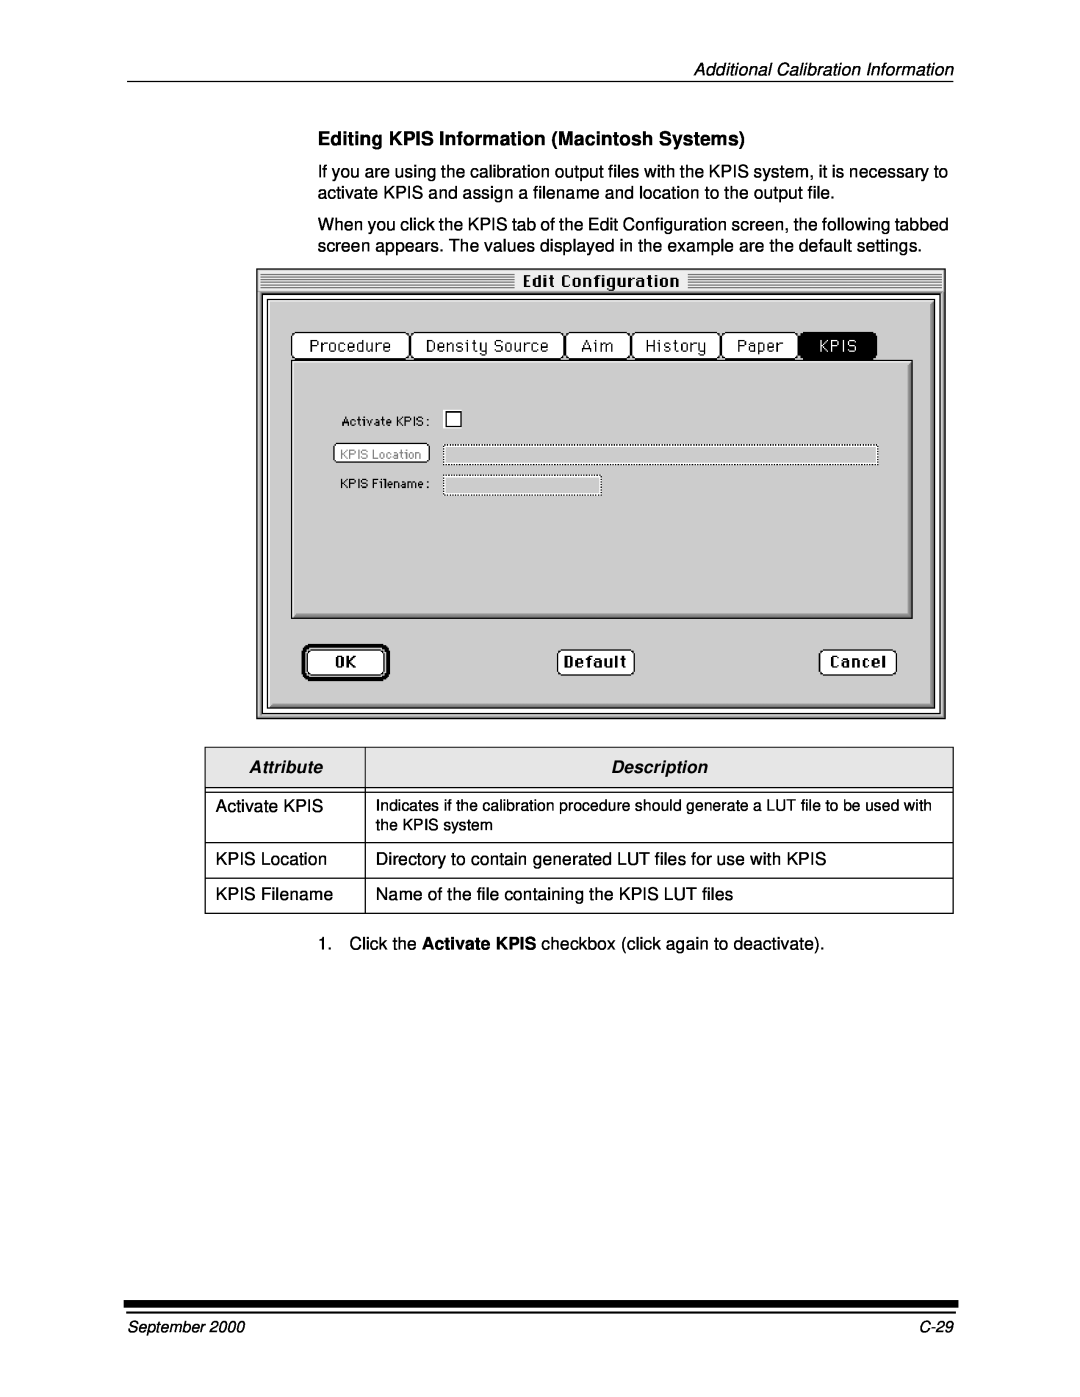 Kodak 20R manual Editing KPIS Information Macintosh Systems, Additional Calibration Information 